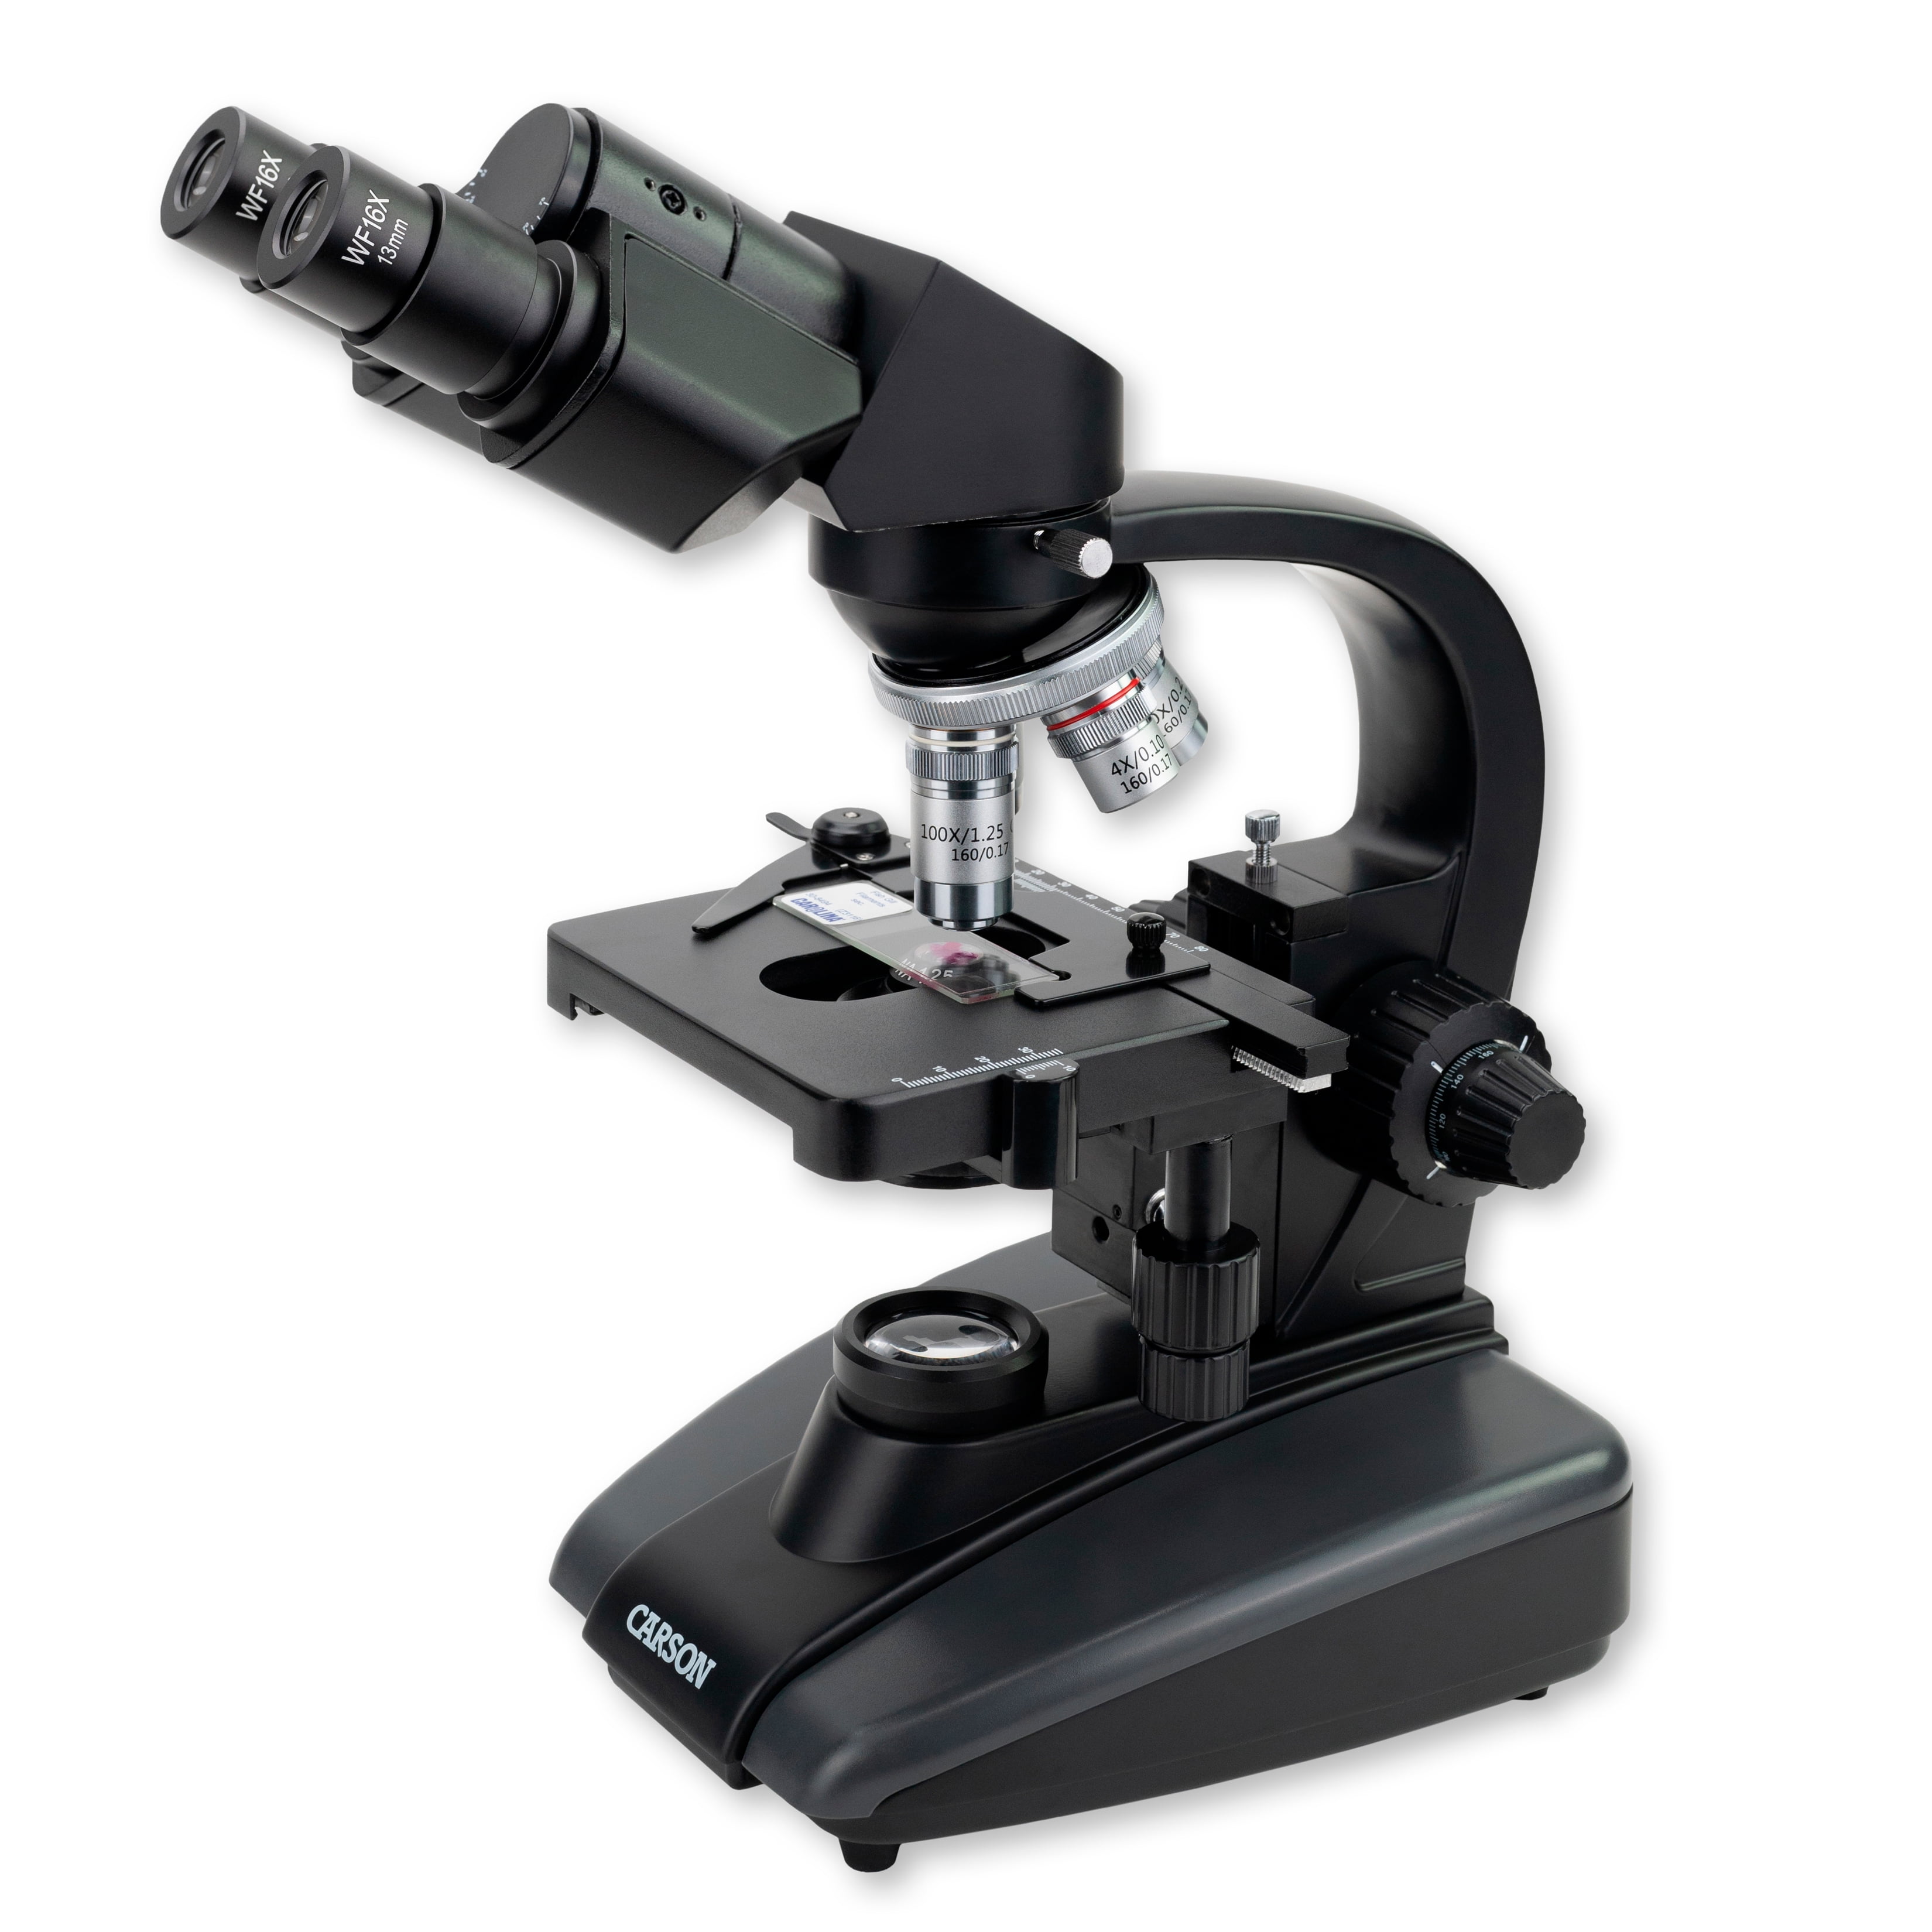 Advanced, Illuminated Pocket Microscope (100X) - Portable and High-Quality  Microscope